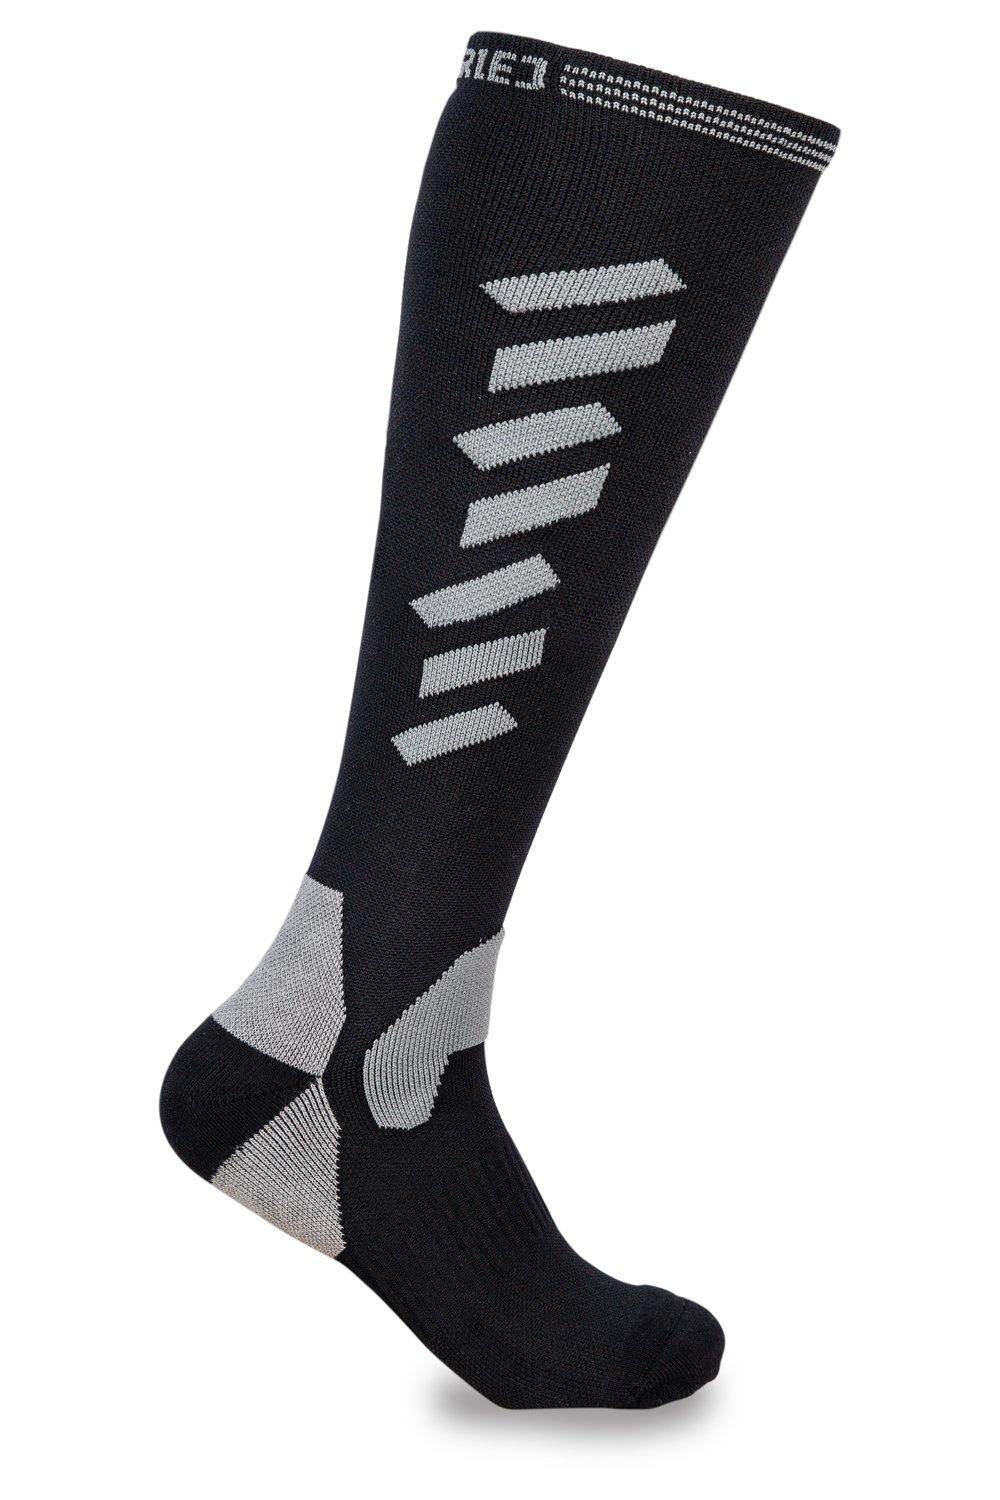 Sundried Full Length Compression Socks Socks Activewear